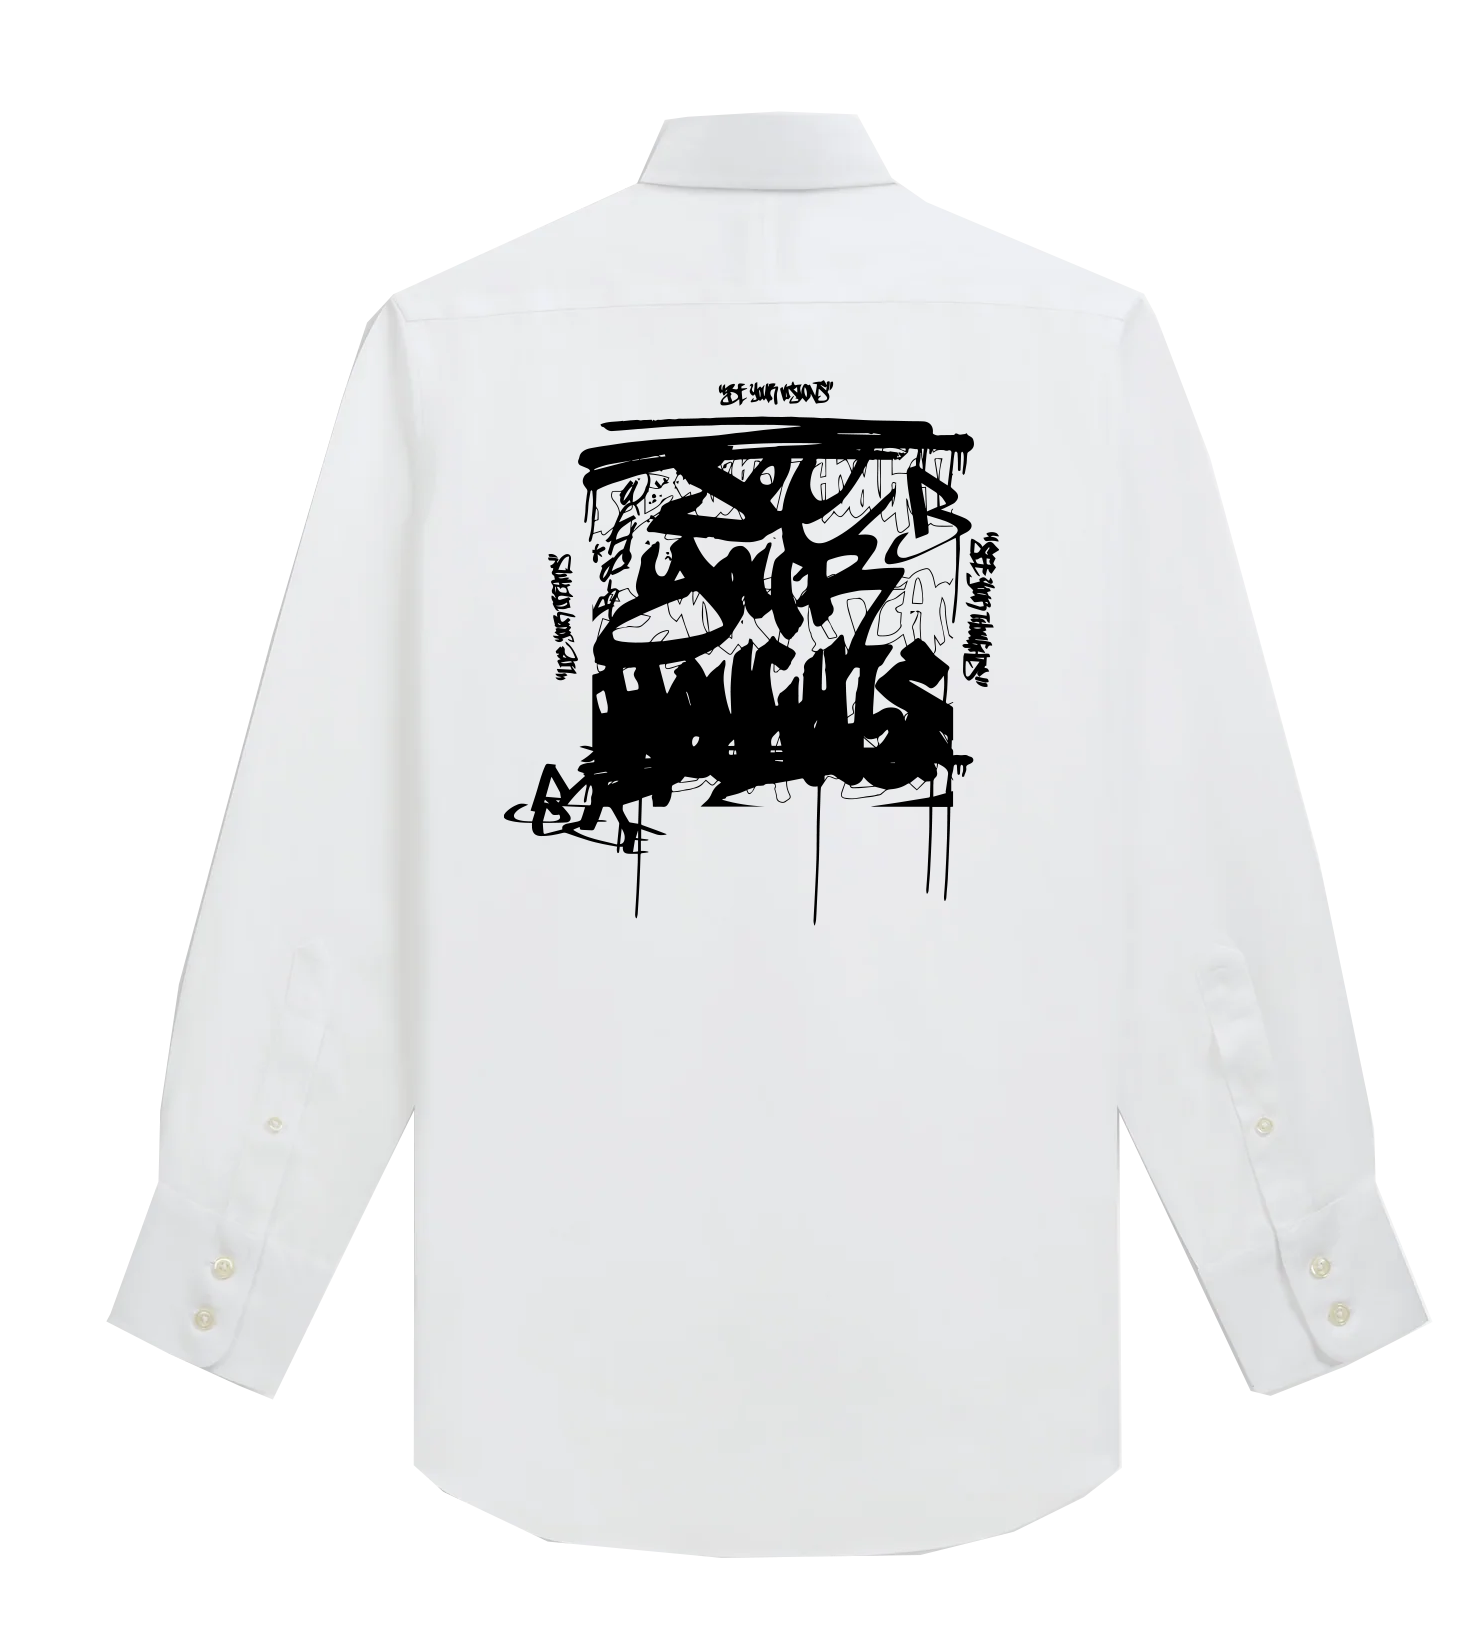 White Second Life Shirt Volume 3 - Black Print